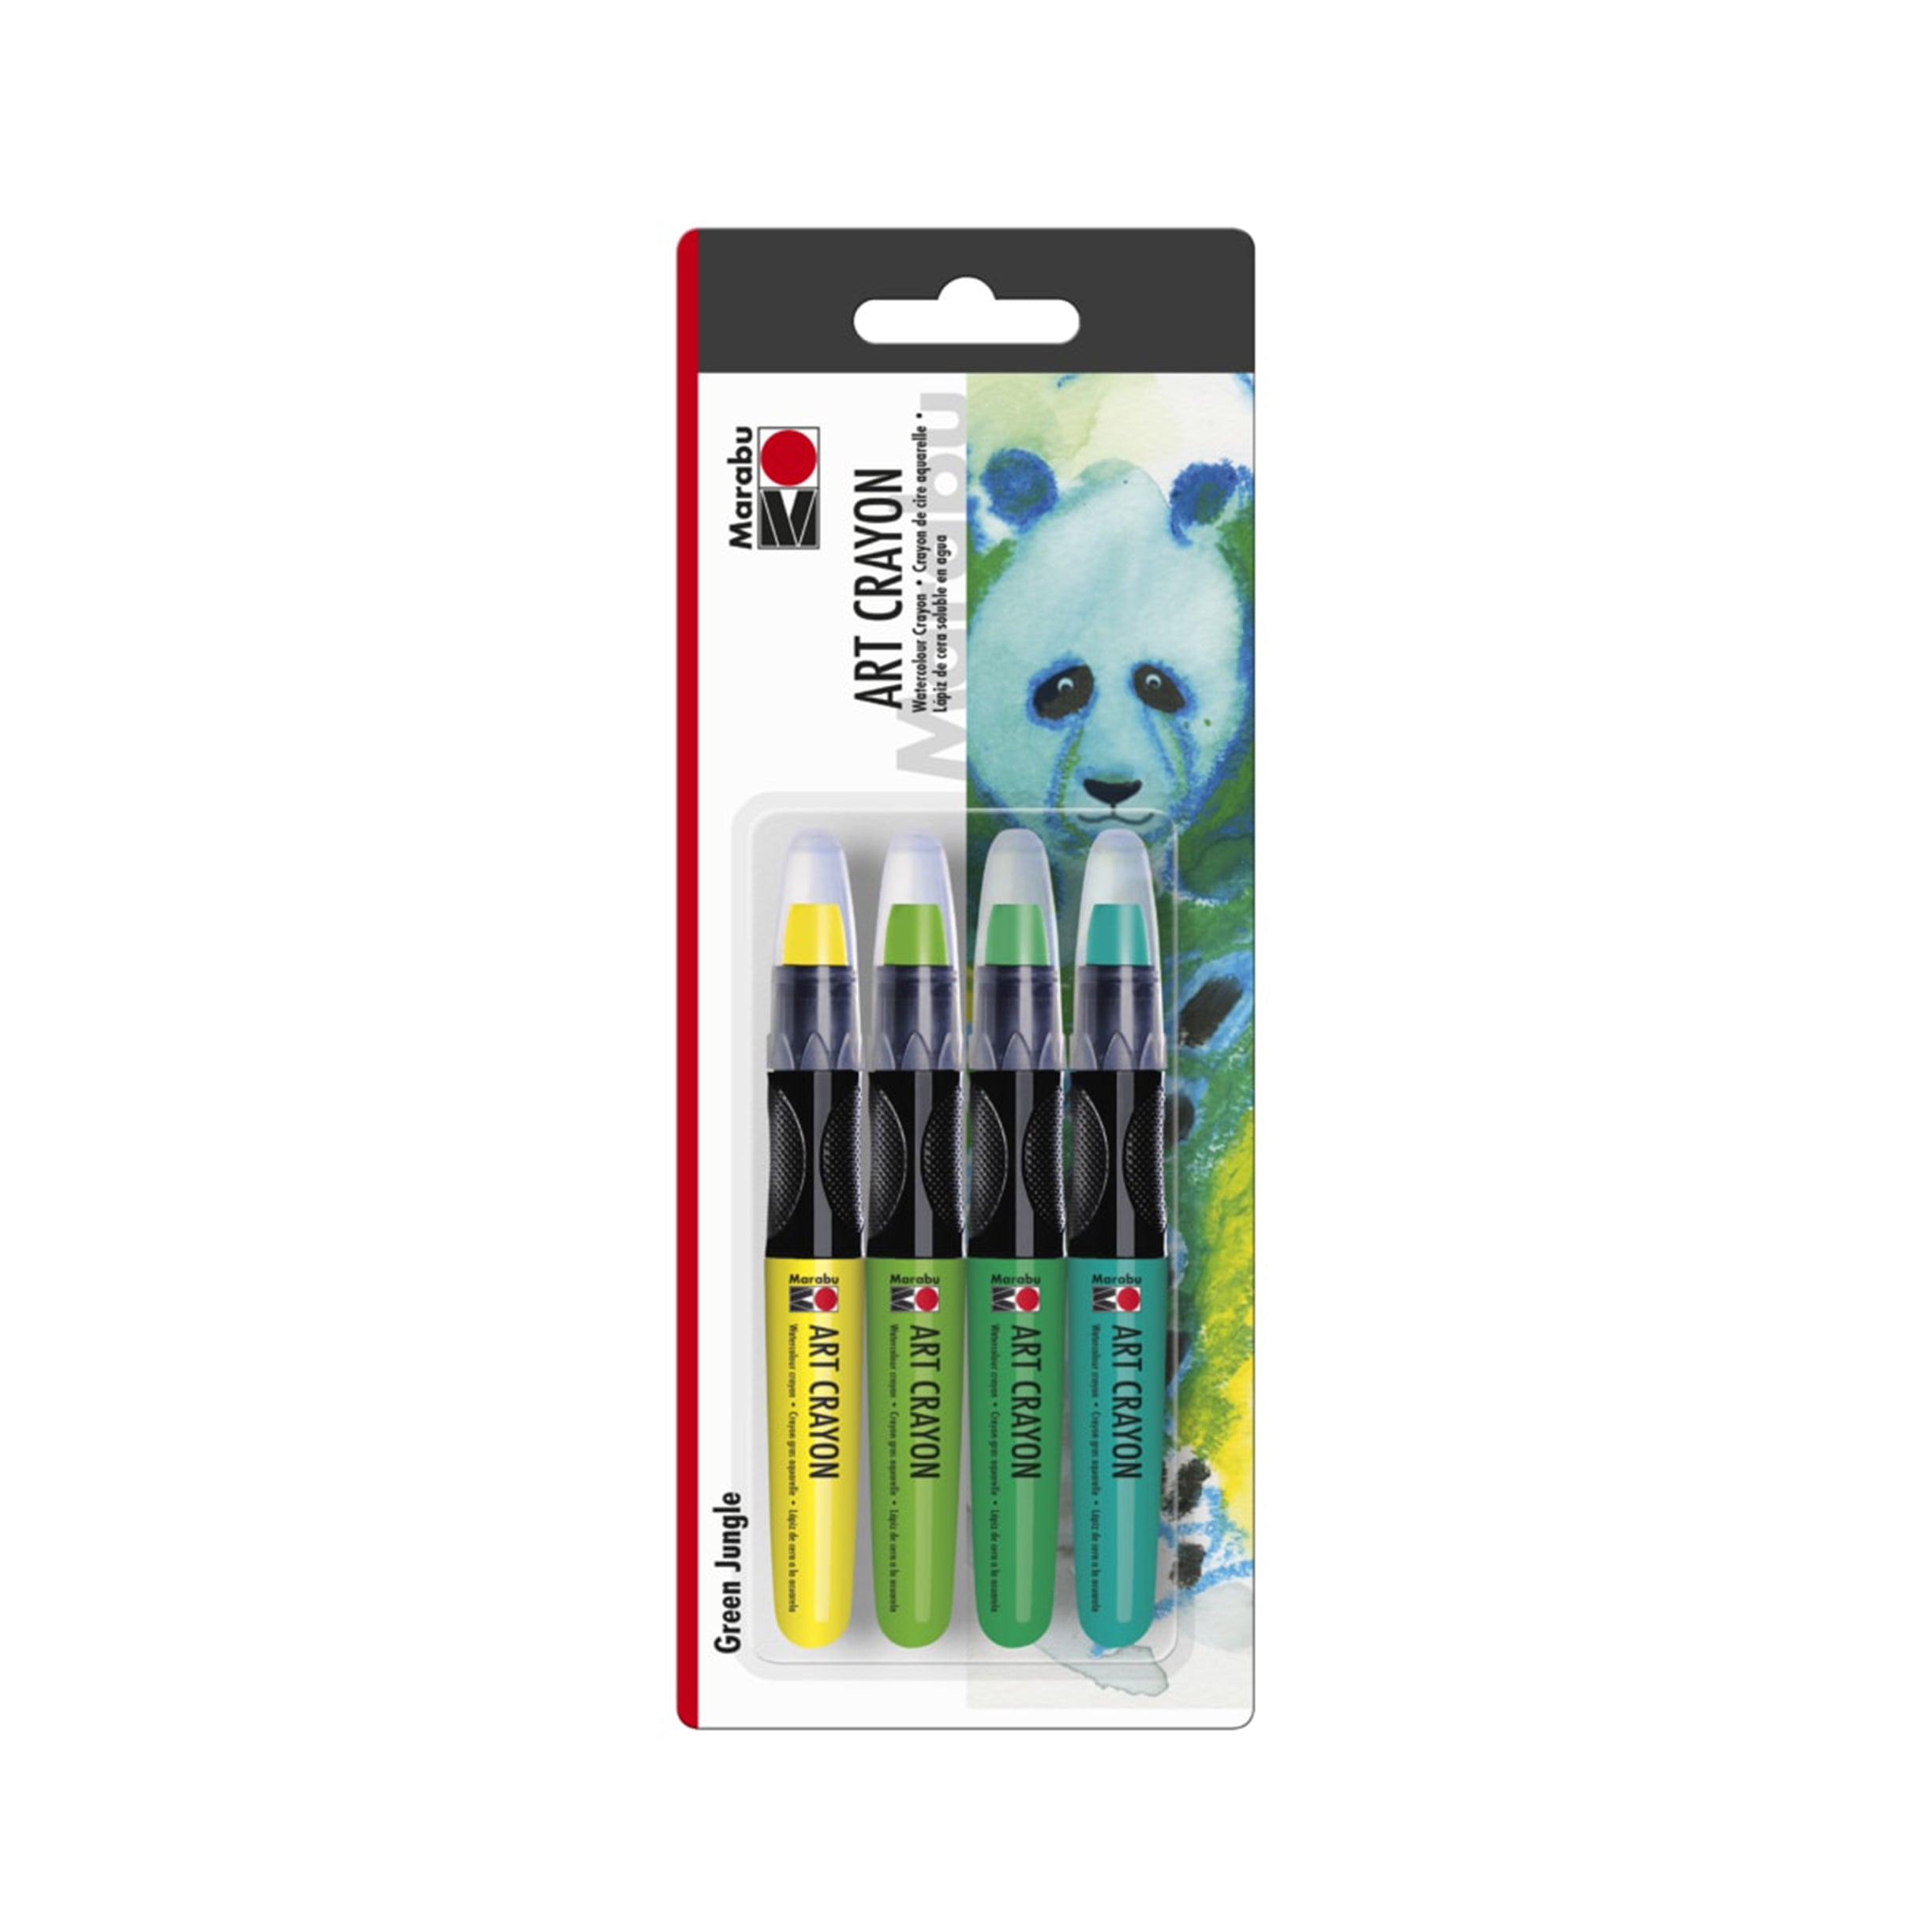 Marabu Mixed Media Art Crayons, Green Jungle Set of 4